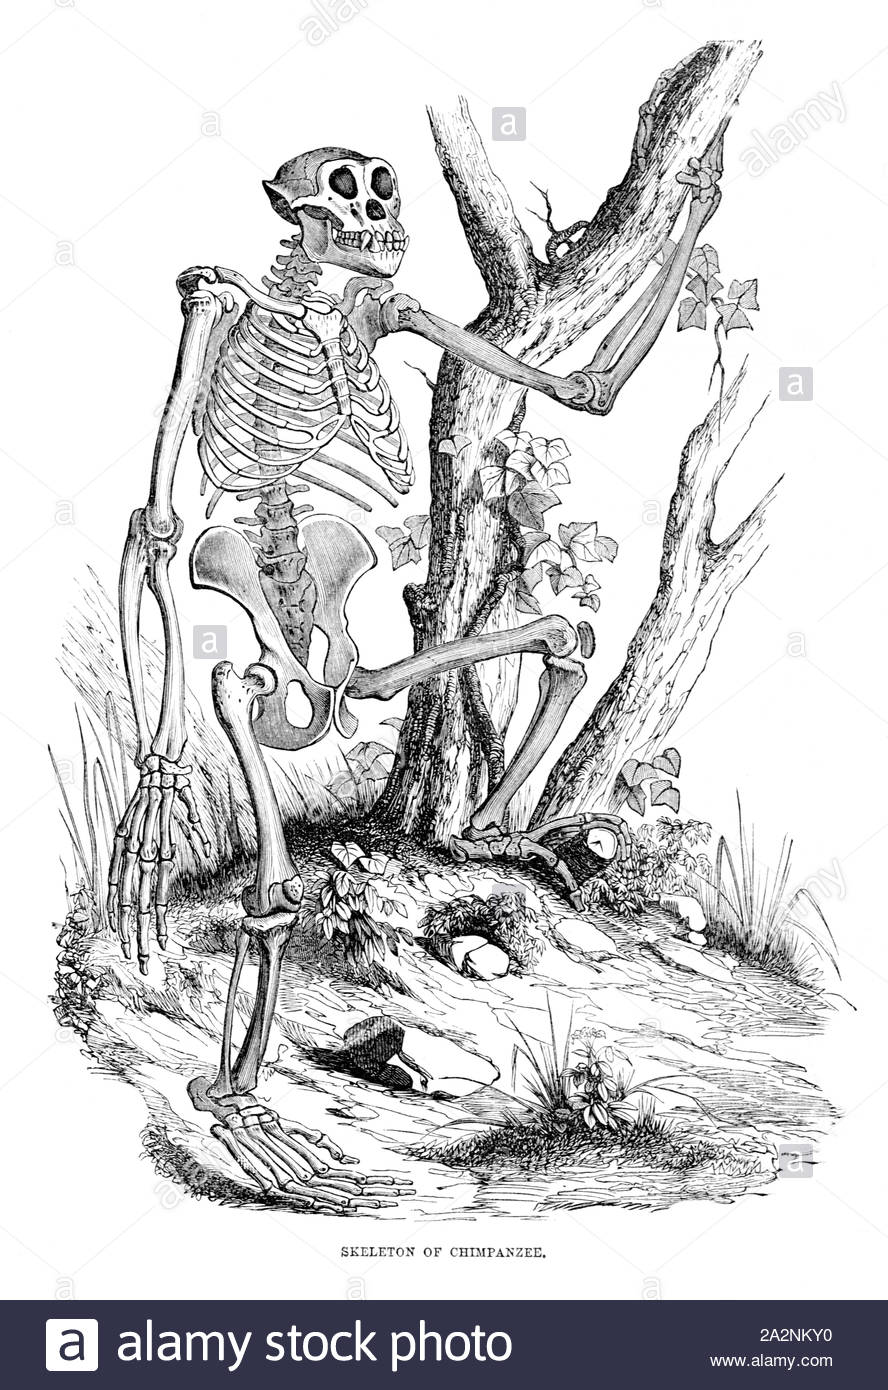 Skeleton of a Chimpanzee, vintage illustration from 1880 Stock Photo